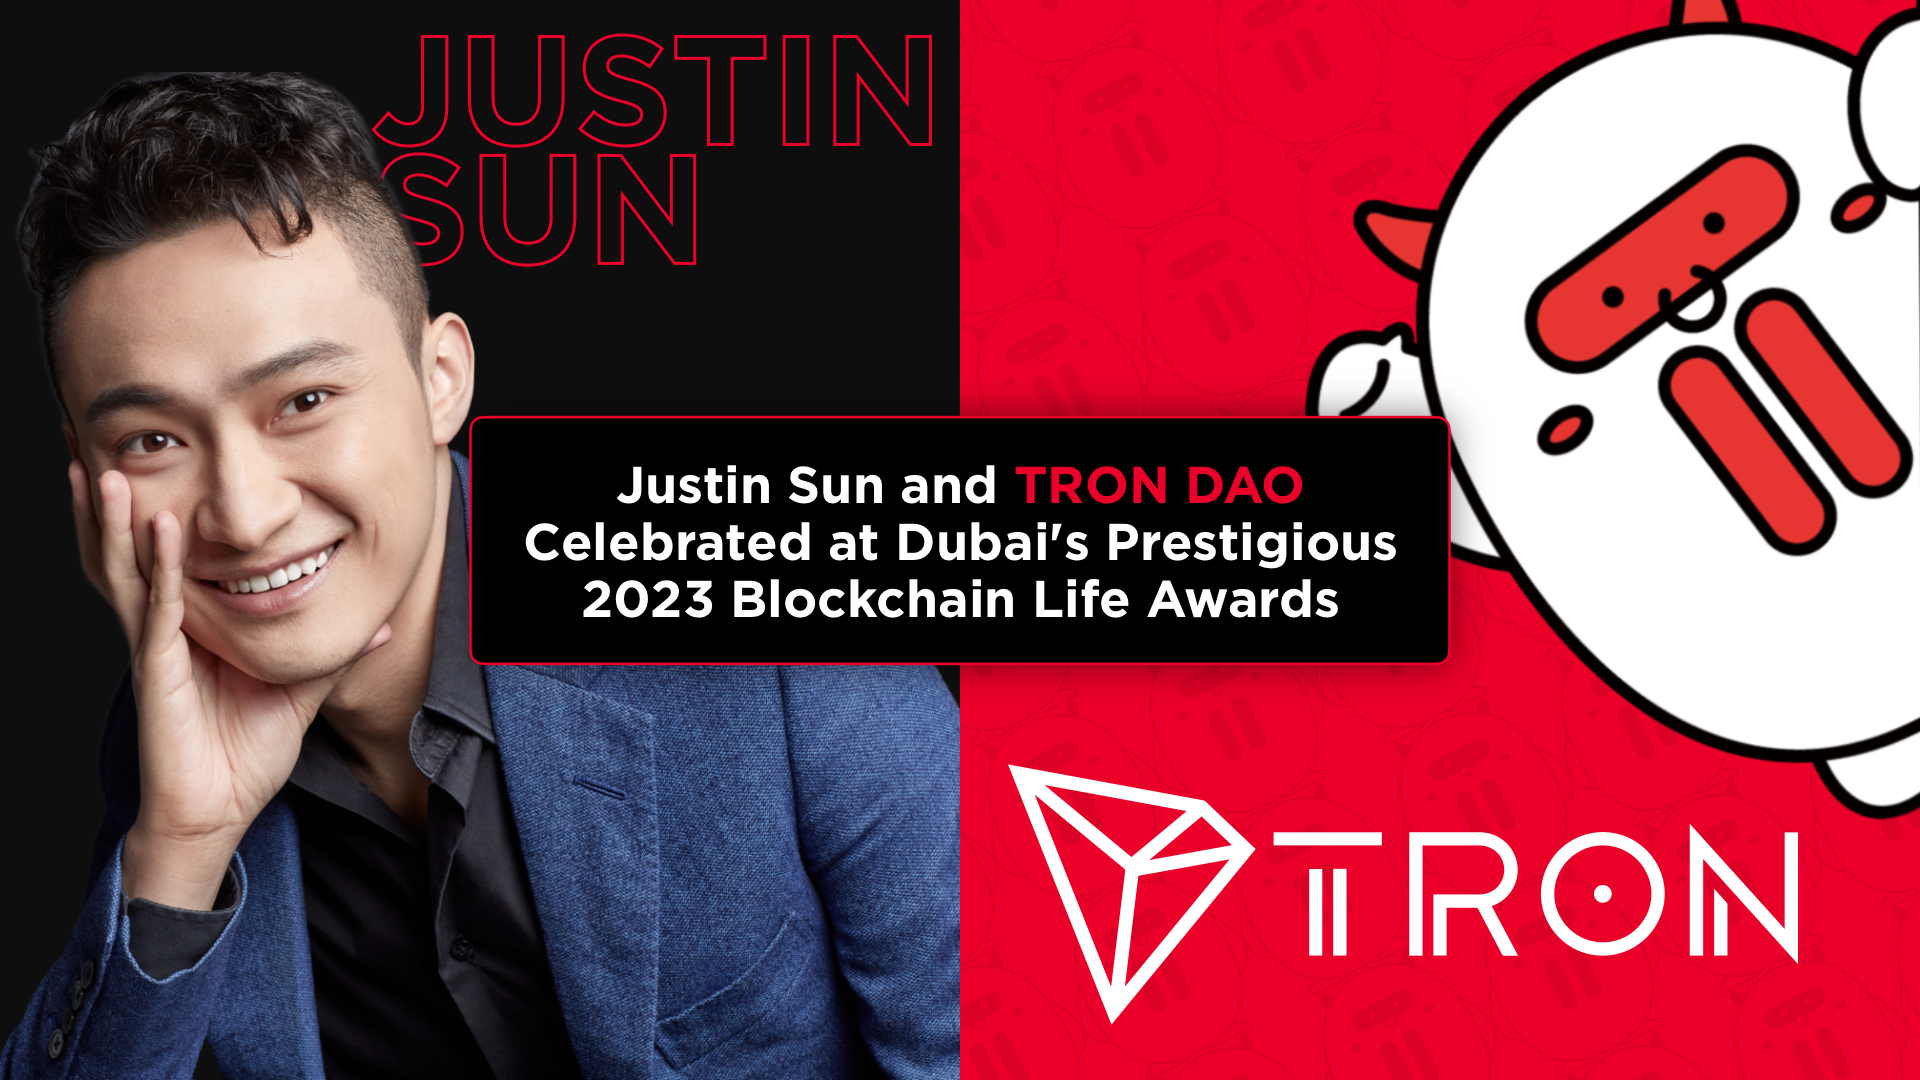 Justin Sun and TRON DAO Celebrated at Dubai’s Prestigious 2023 Blockchain Life Awards